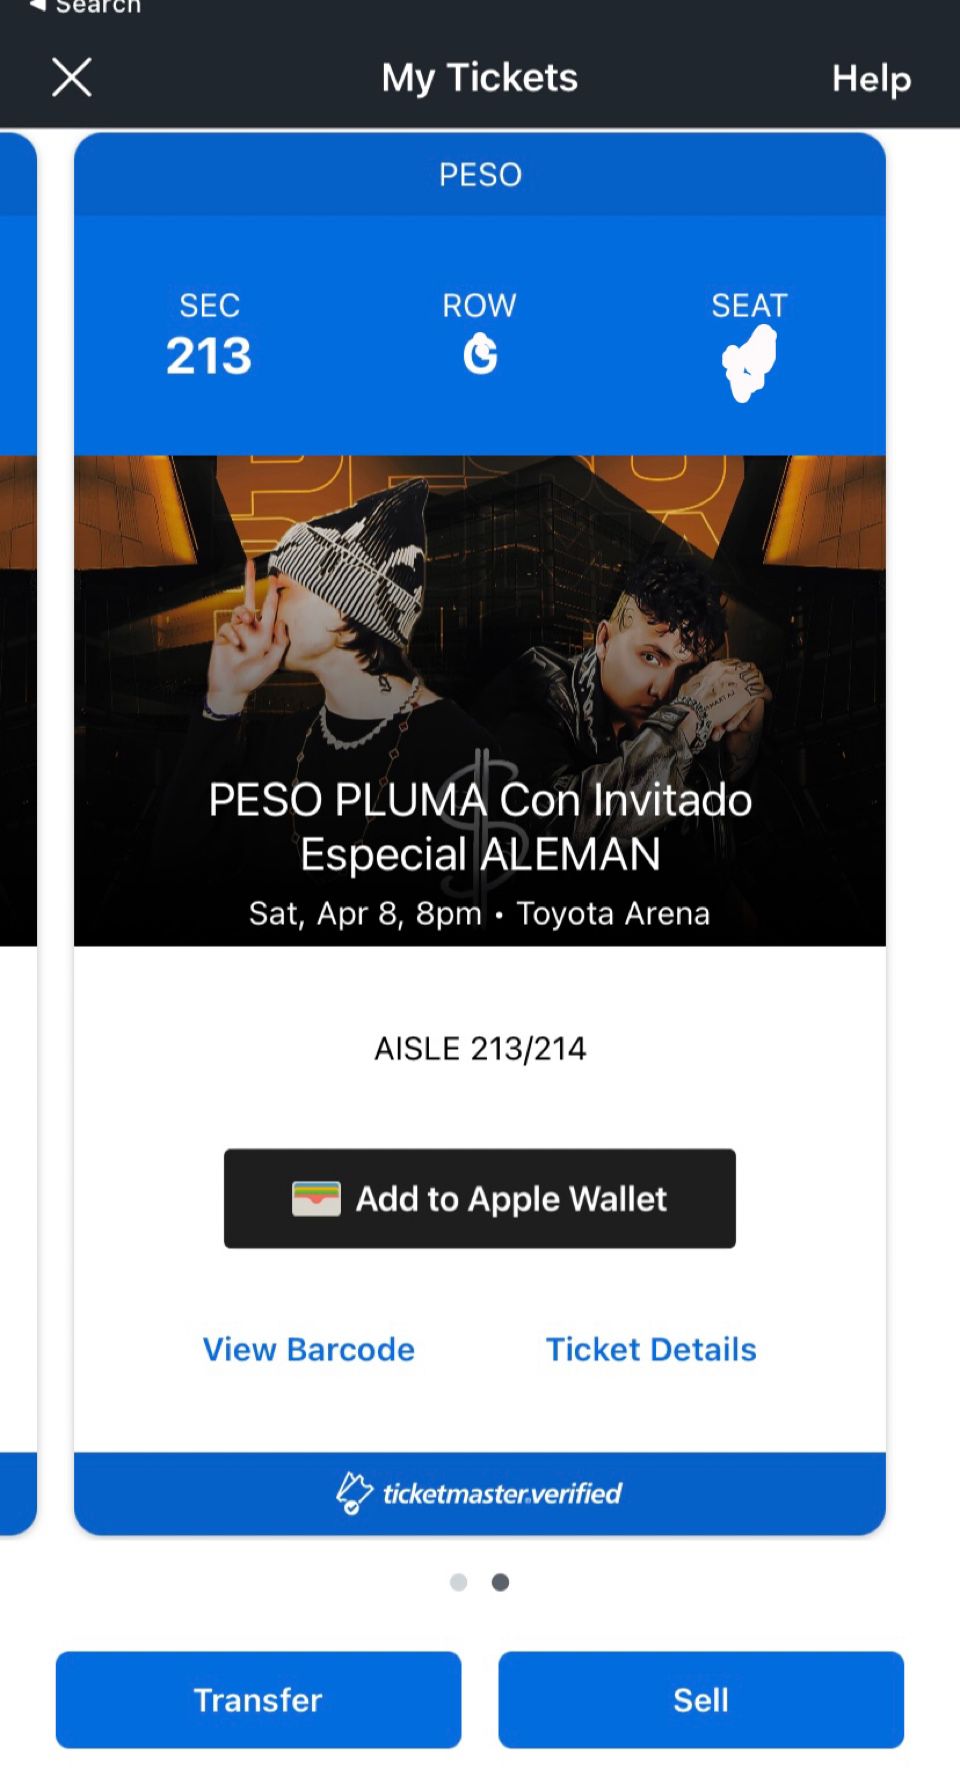 Peso Pluma Tickets 